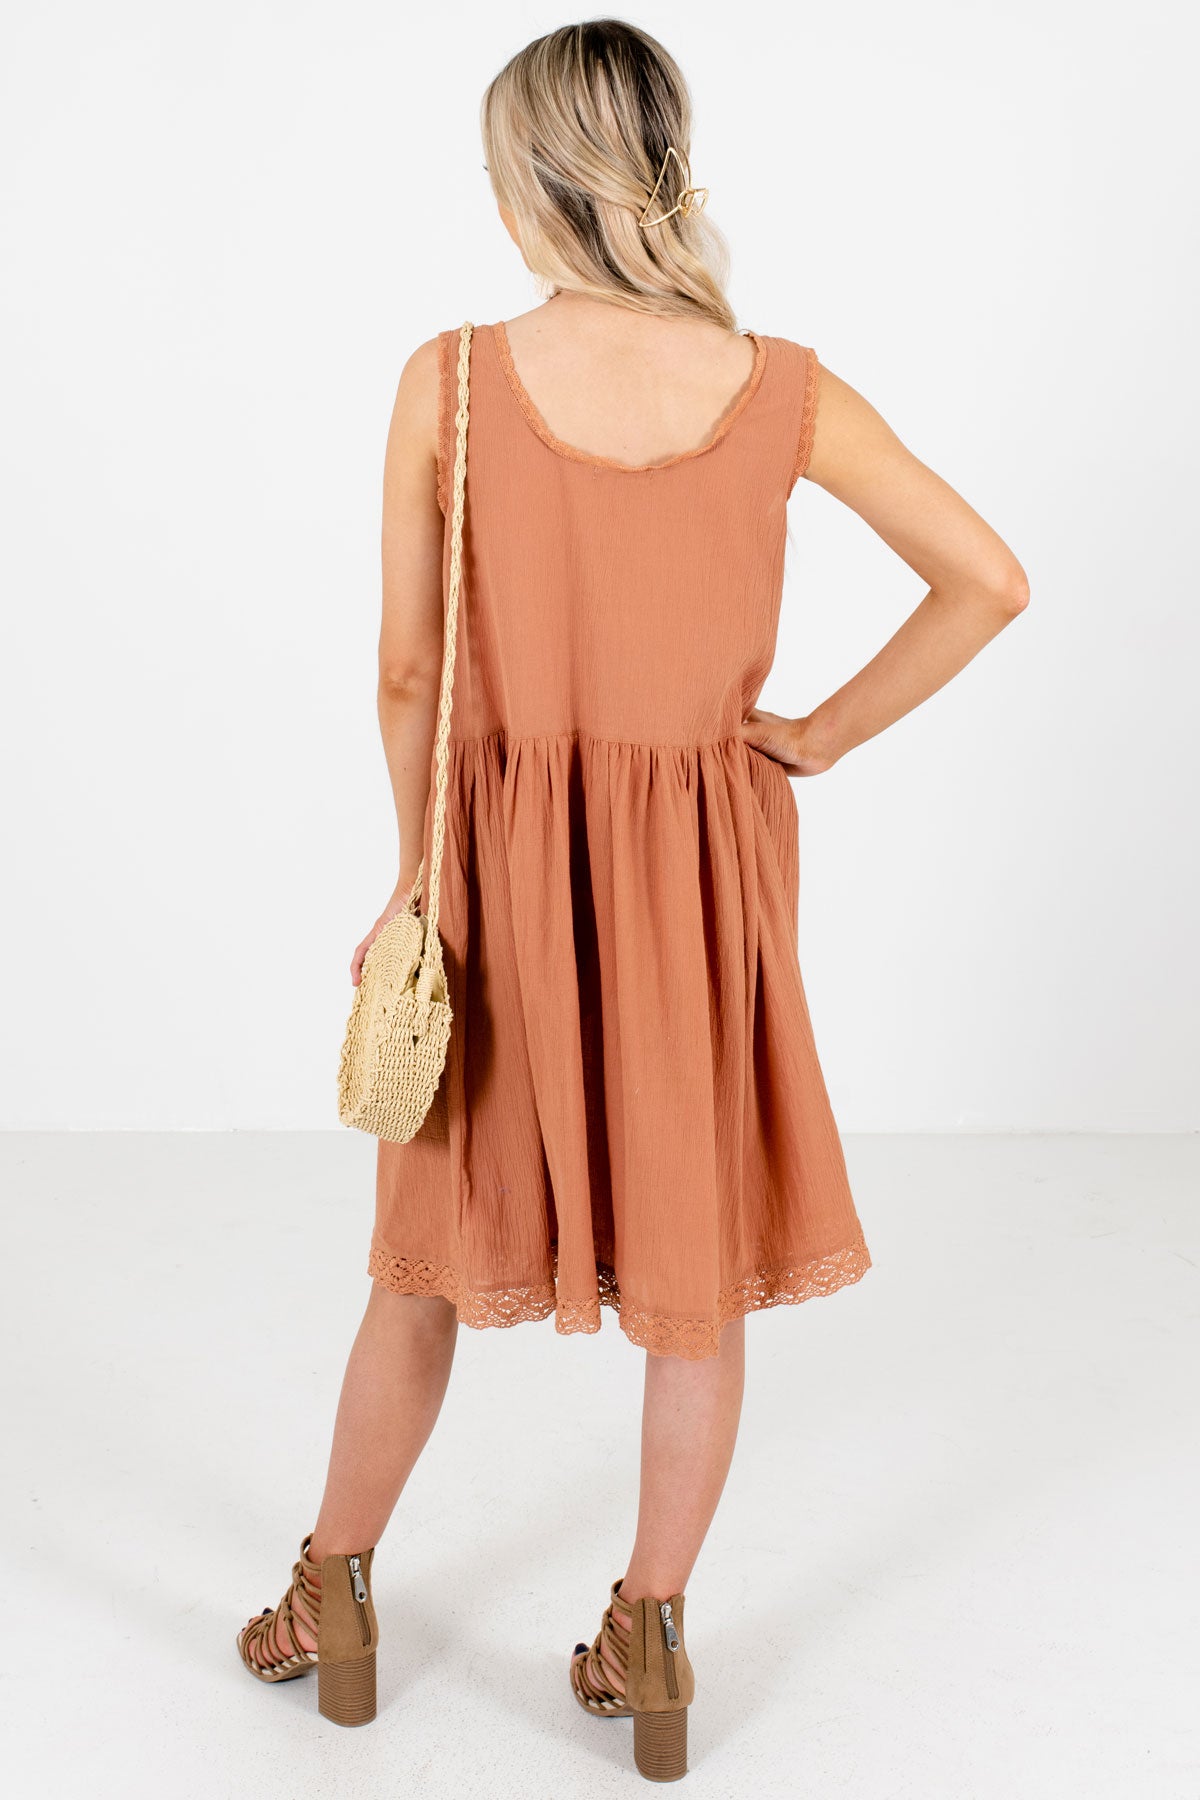 Women's Muted Orange Crochet Lace Detailed Boutique Dress